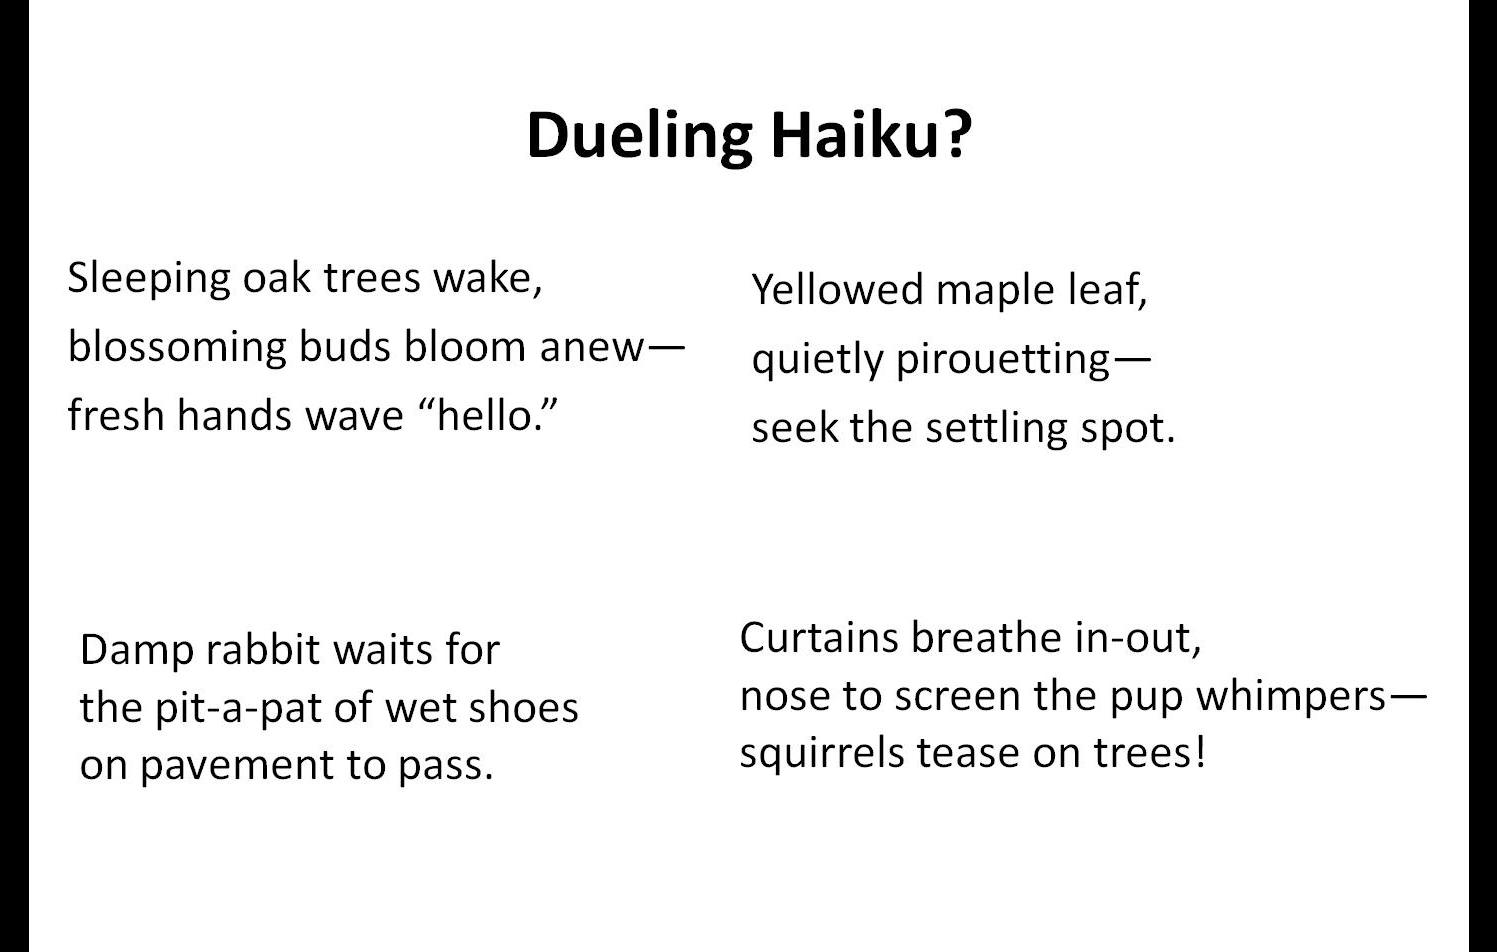 haiku examples